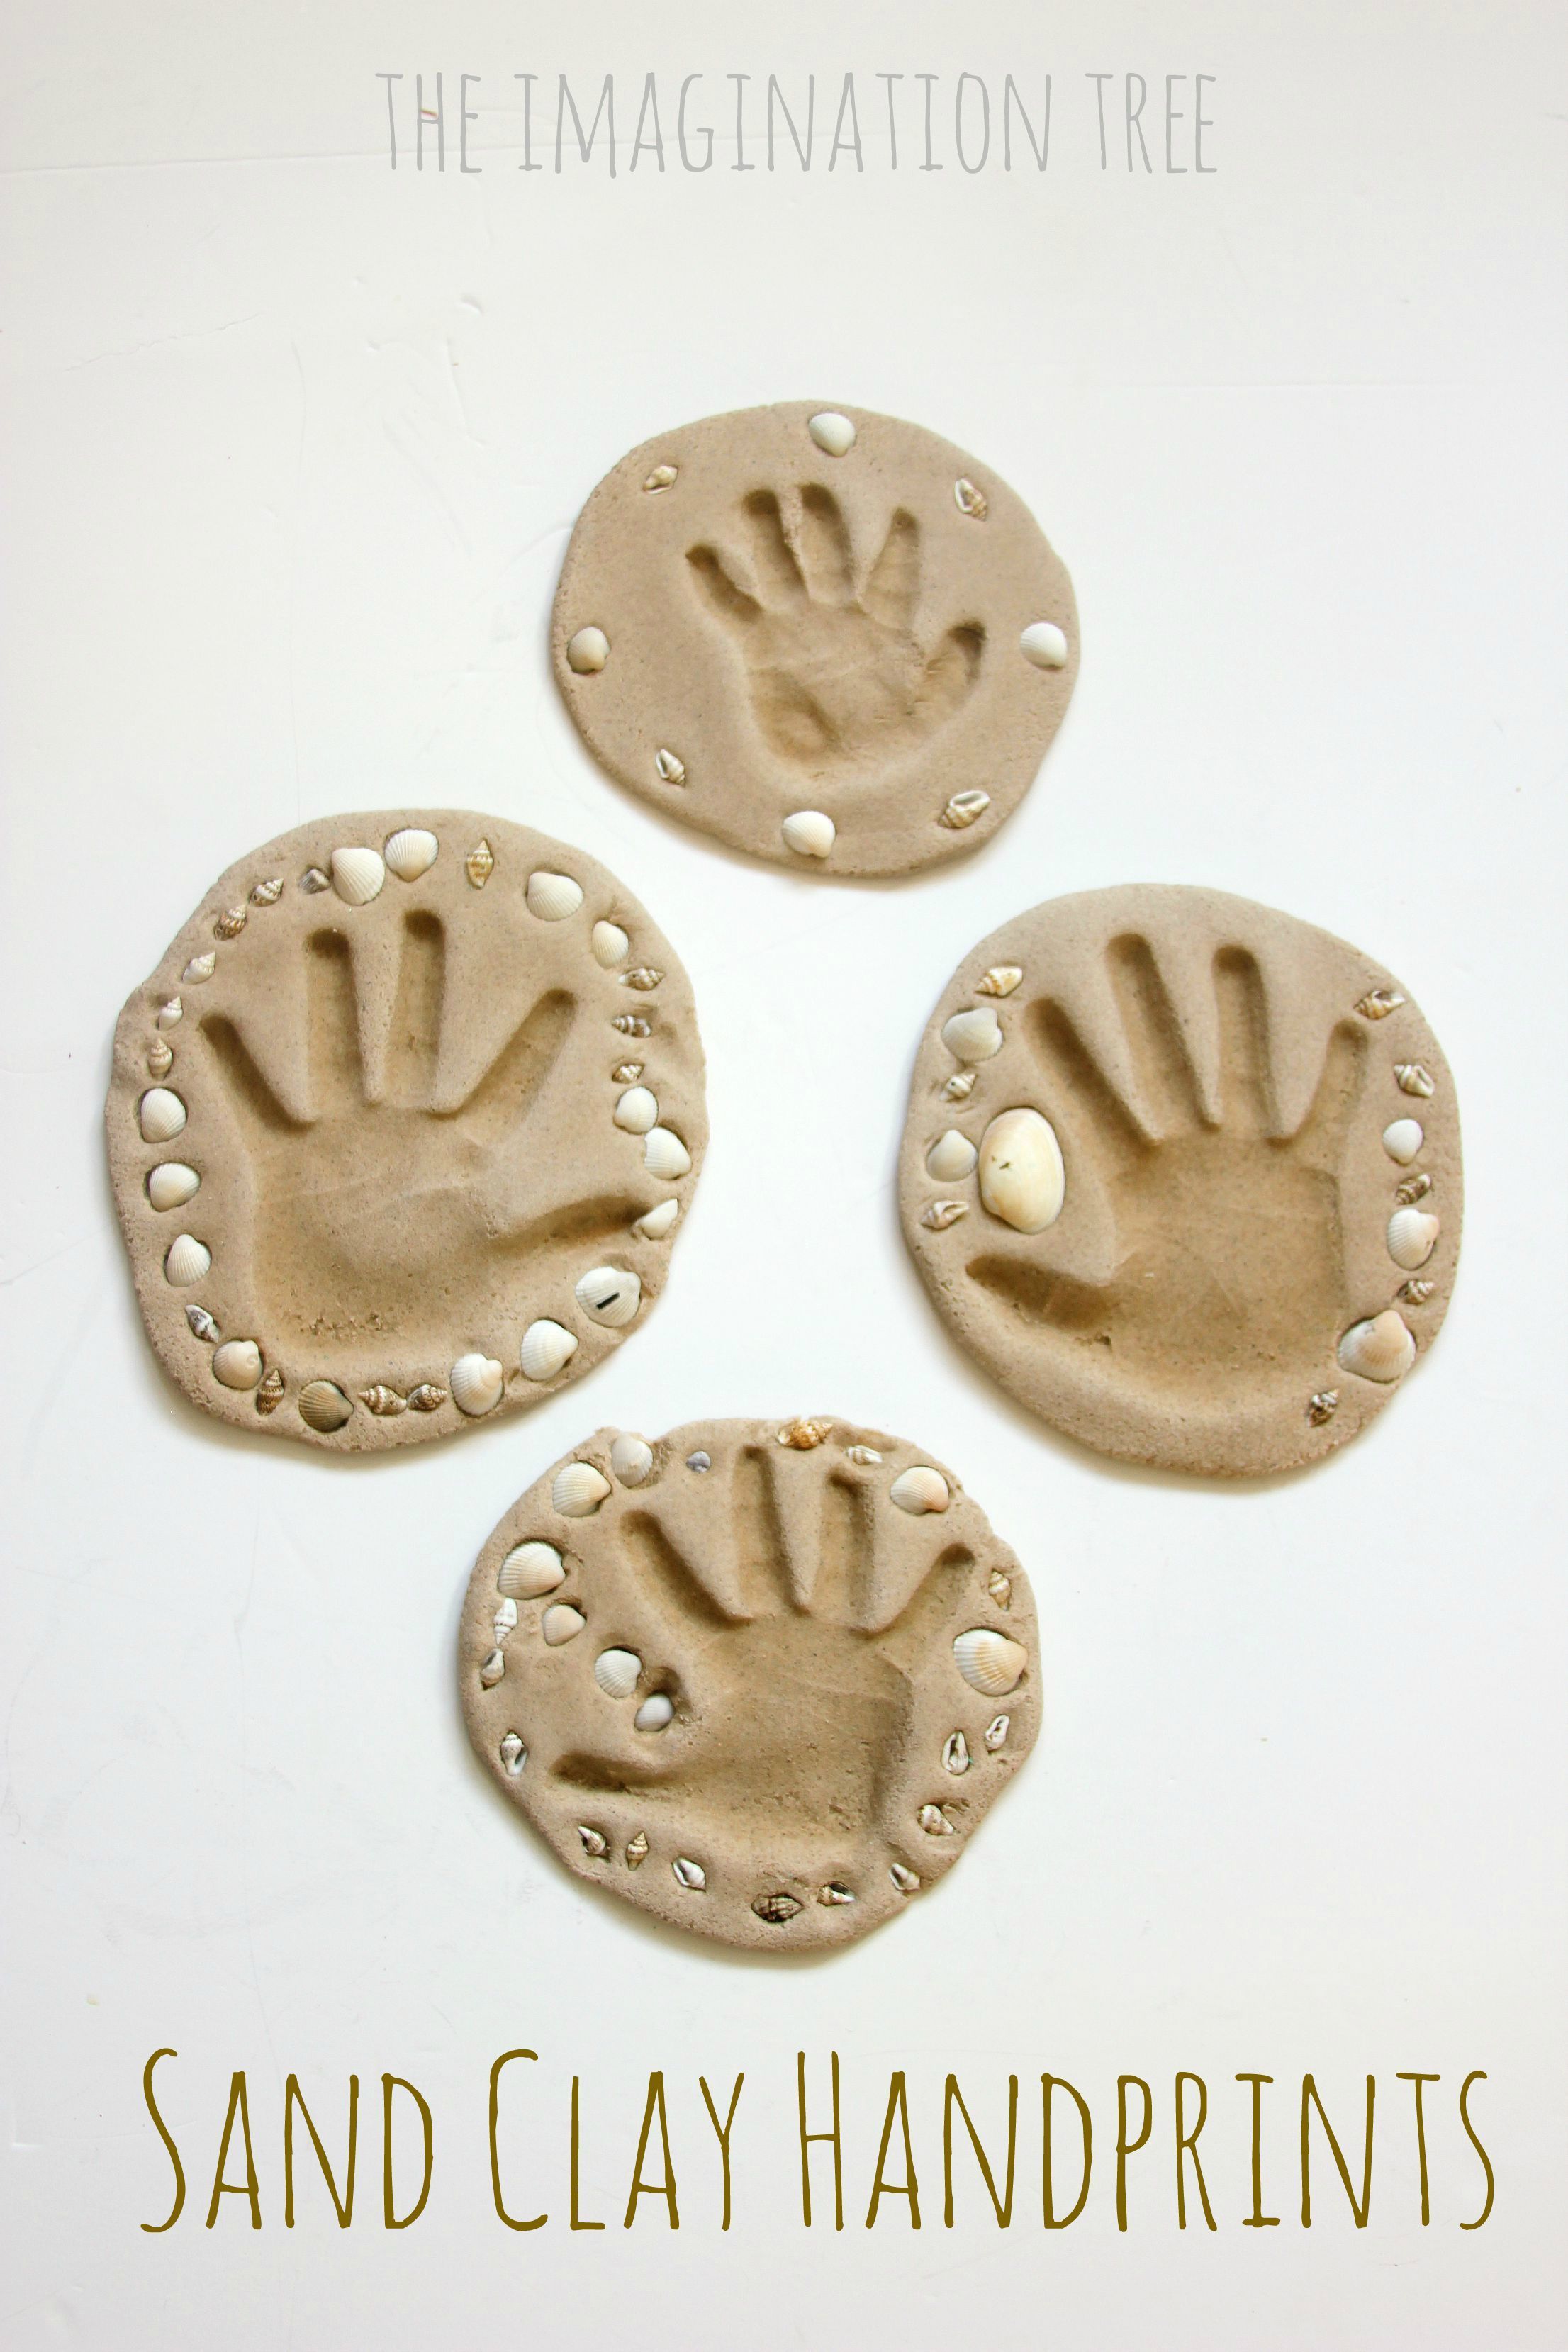 Sand Clay Recipe and Handprint Keepsakes -   23 handprint beach crafts
 ideas